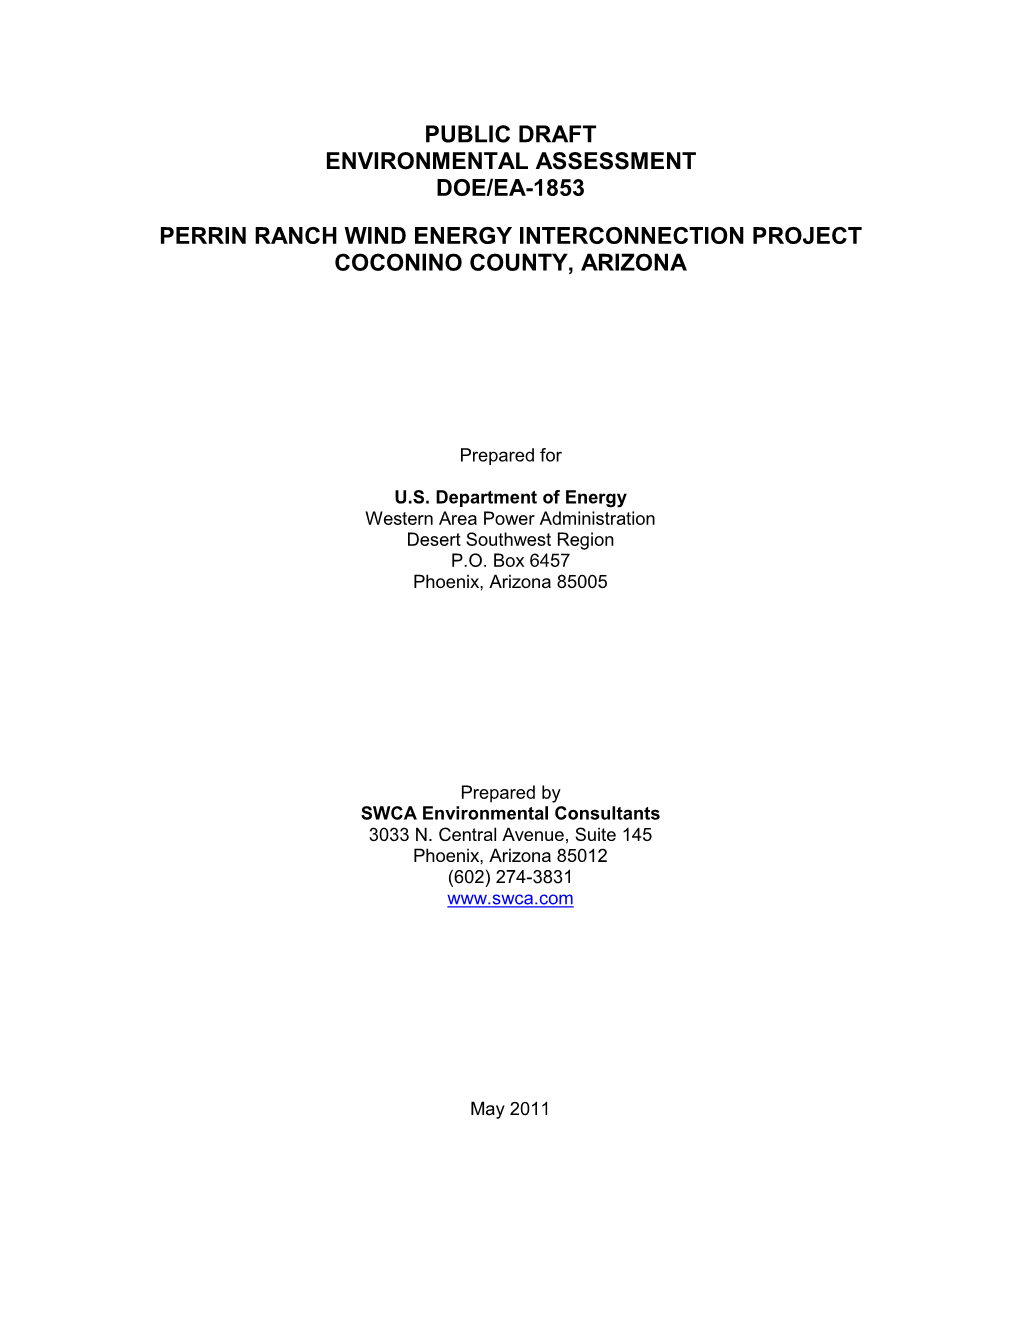 Public Draft Environmental Assessment Doe/Ea-1853 Perrin Ranch Wind